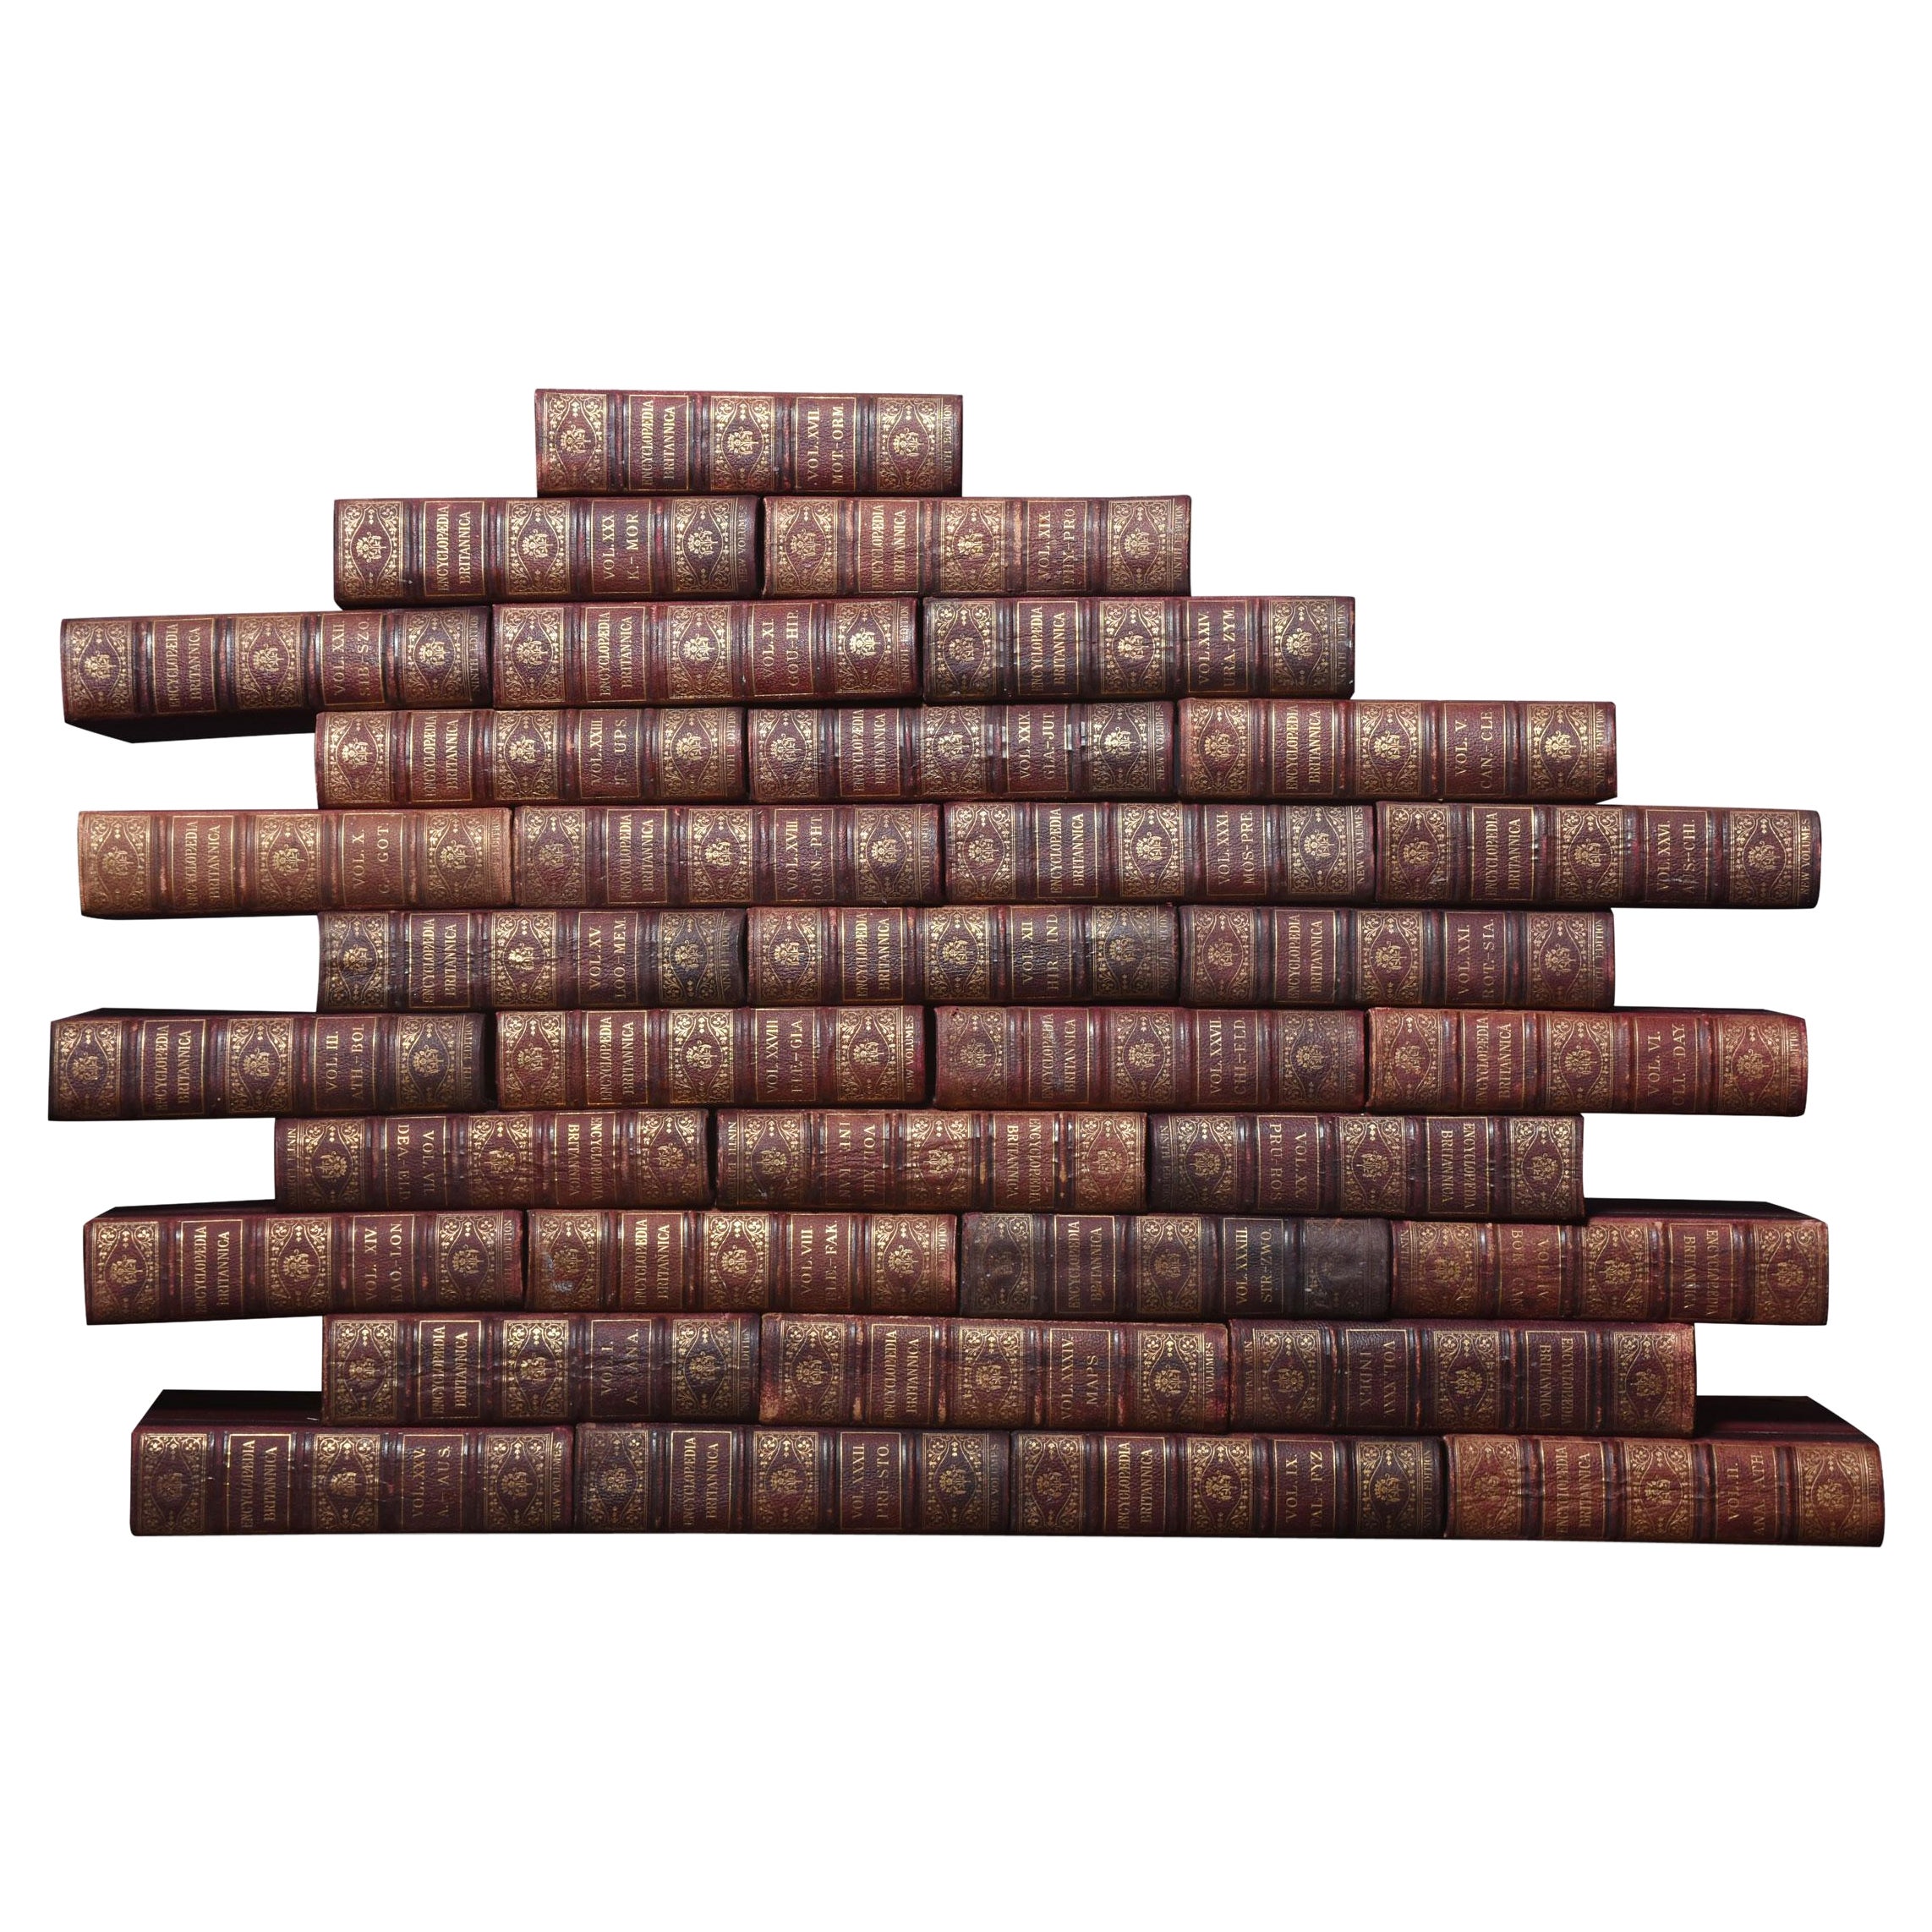 The Encyclopaedia Britannica For Sale